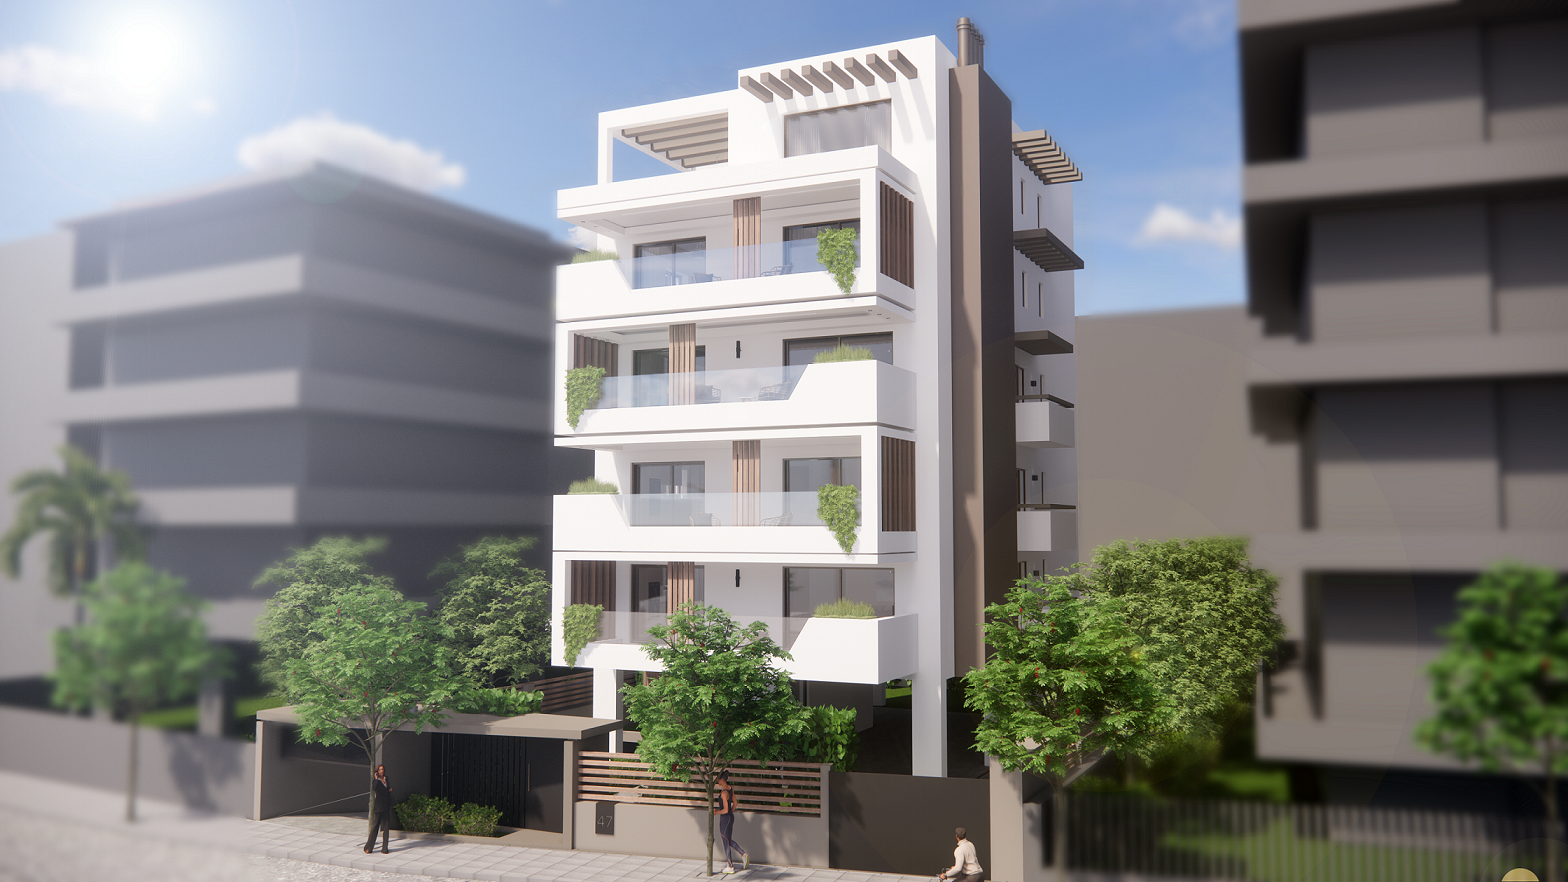 Apartment for sale 4 Bedrooms 2034 sq ft Chalandri - € 700,000